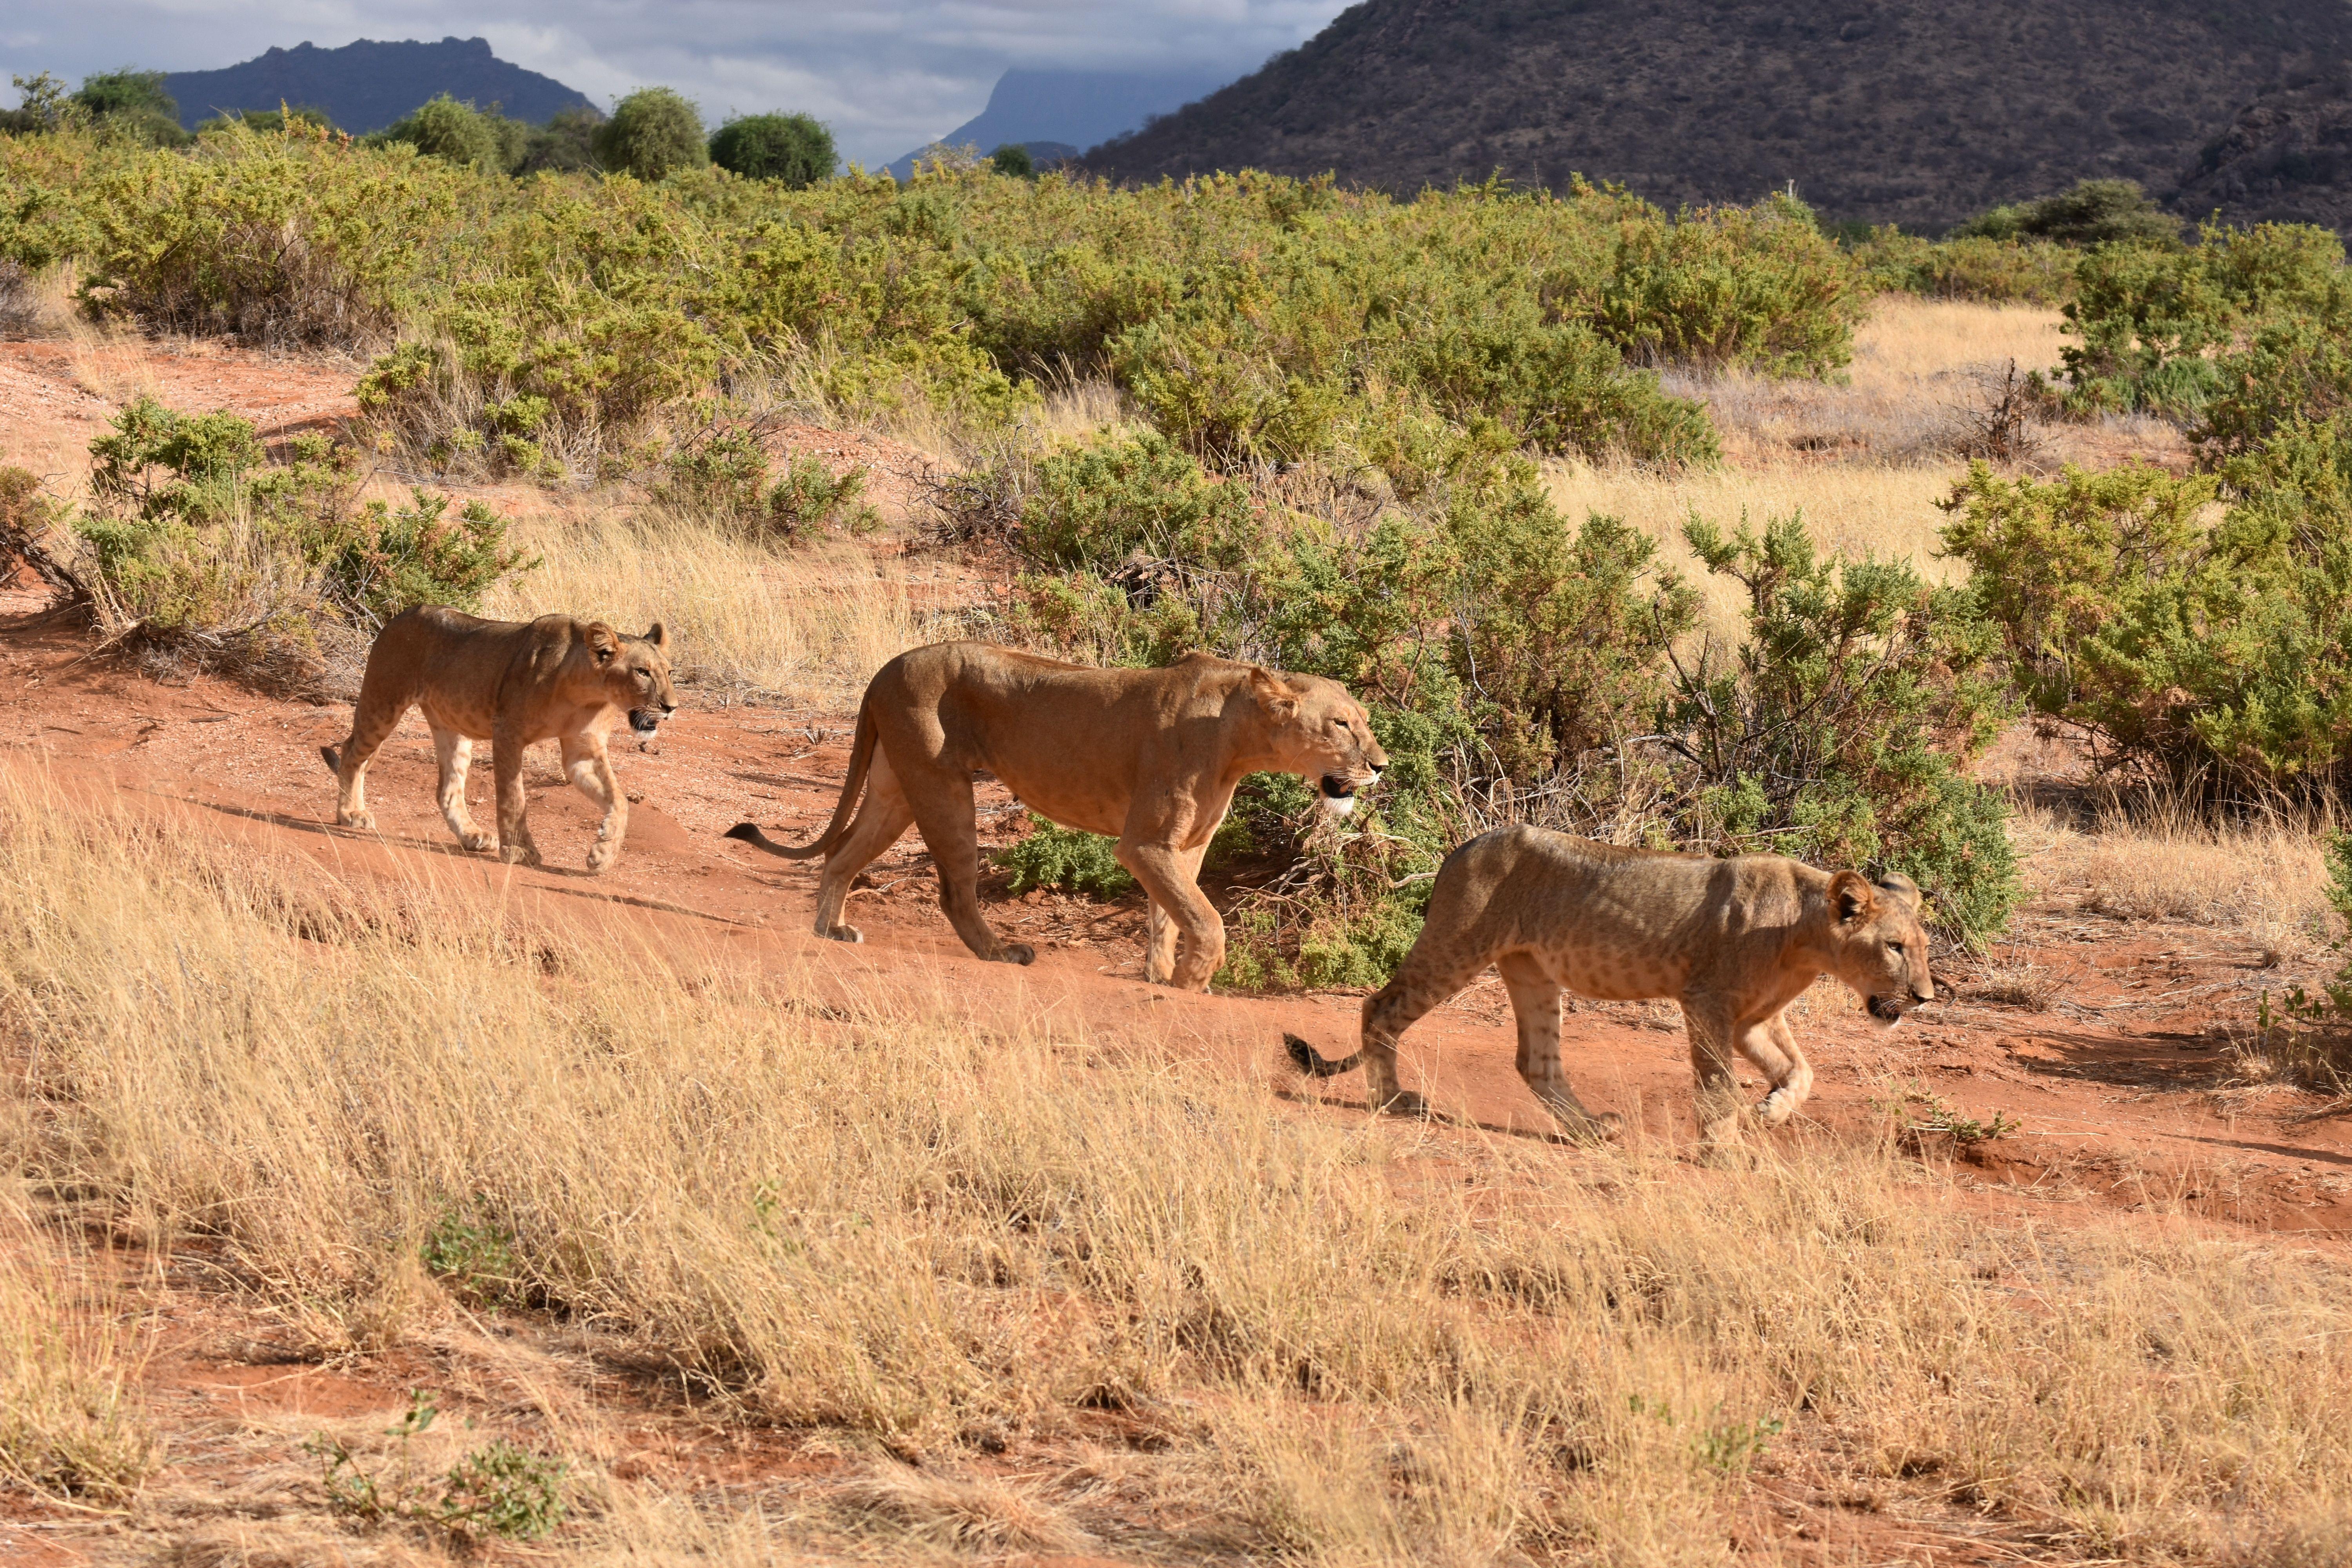 Samburu National Reserve, Kenya